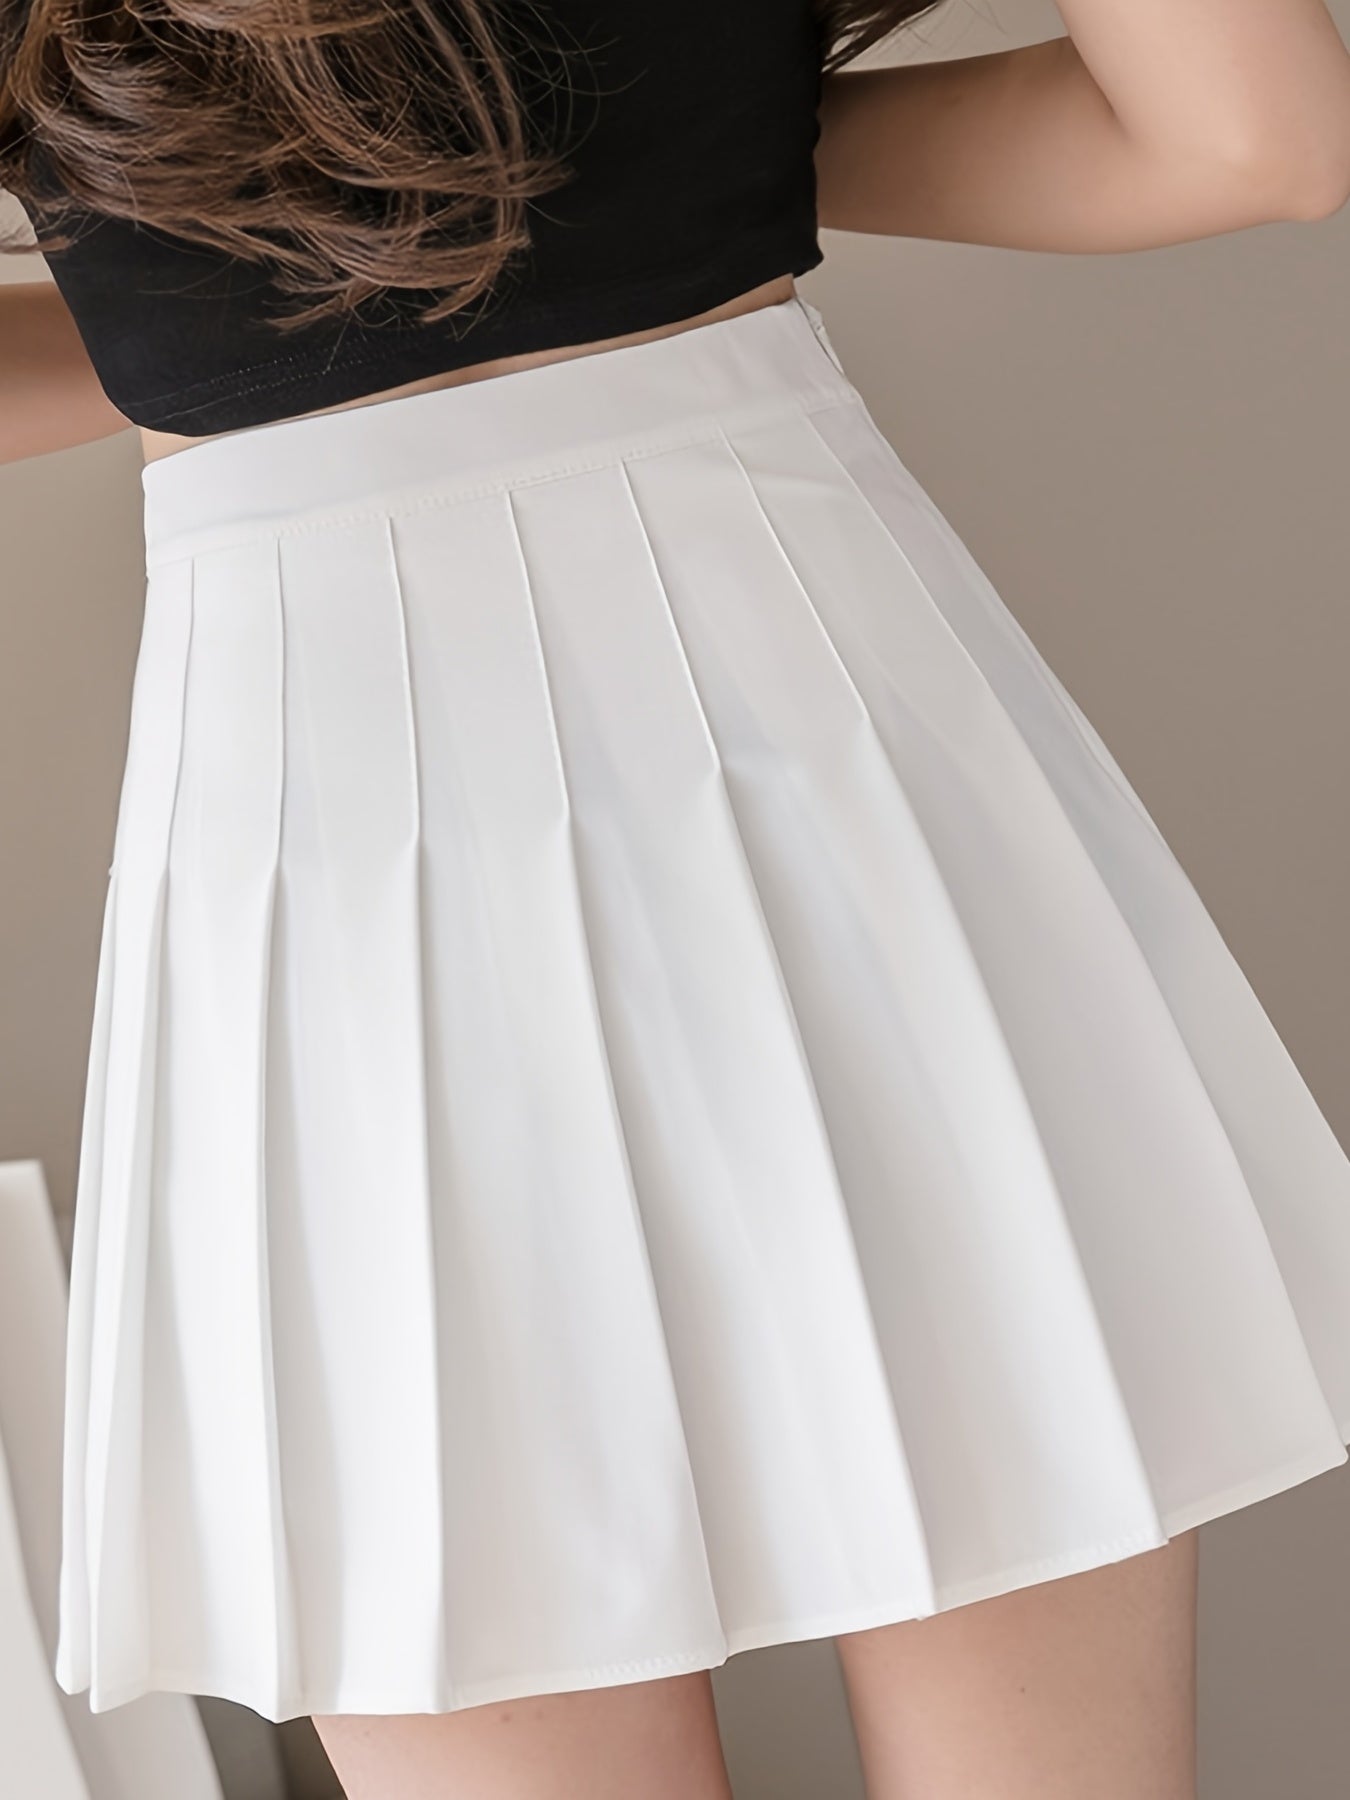 vlovelaw  Kpop High Waist Pleated Skirts, Preppy Elegant Bodycon A Line Mini Skirts, Women's Clothing